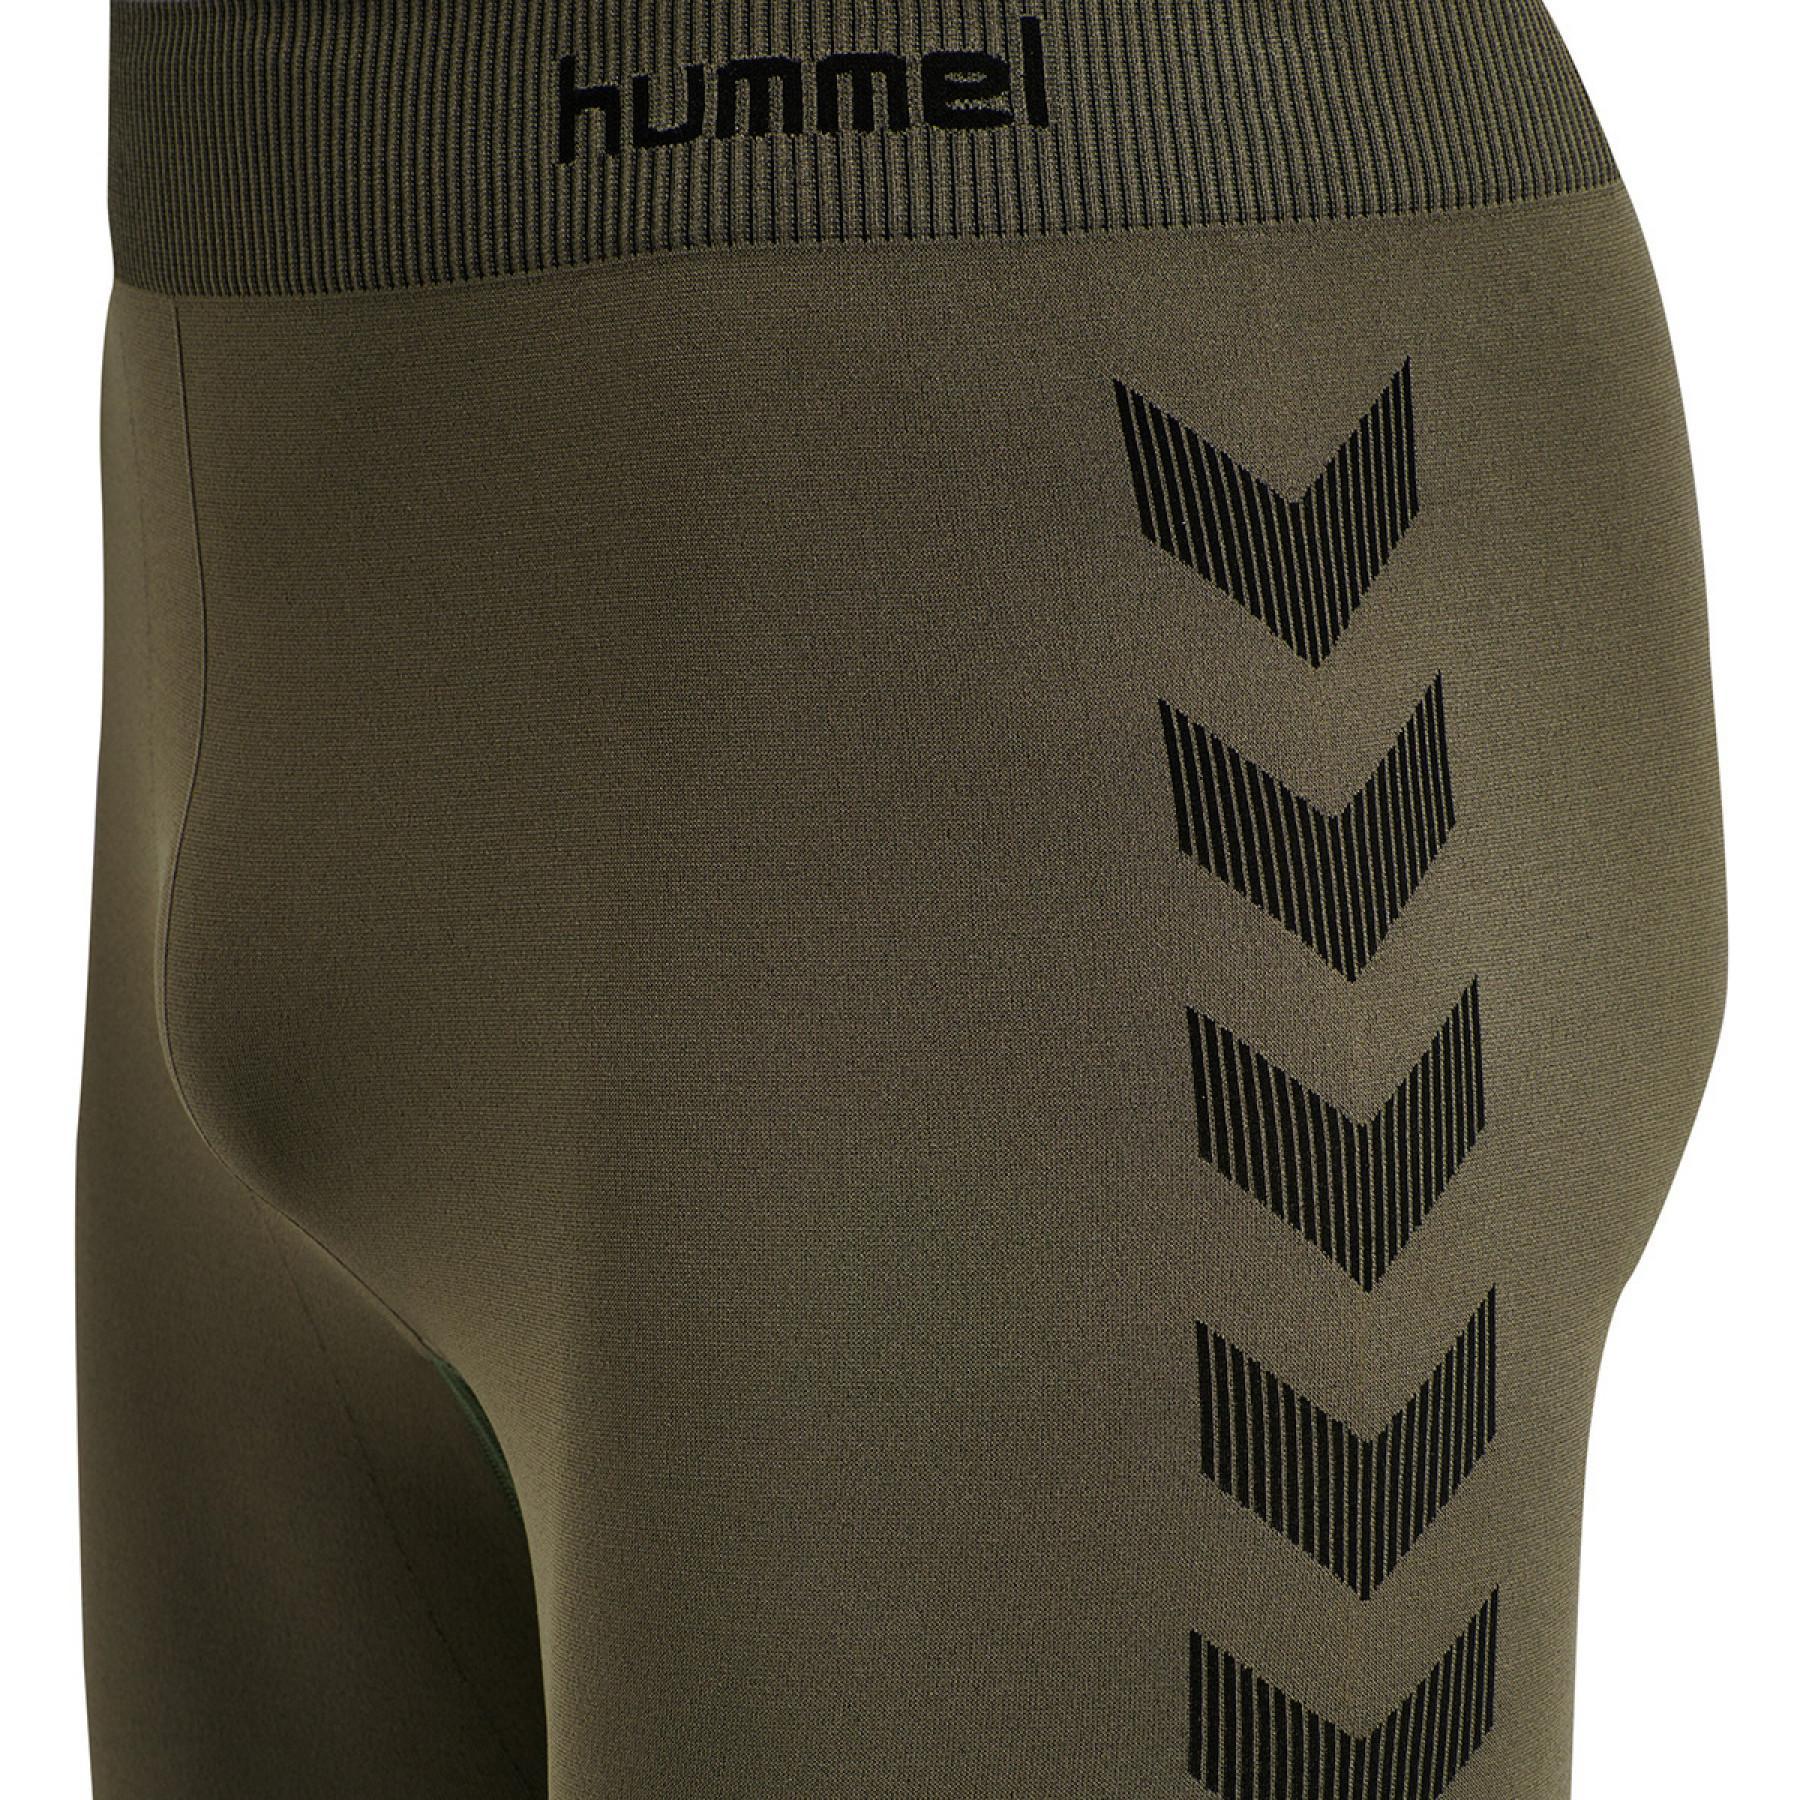 Legging Hummel hmlfirst training